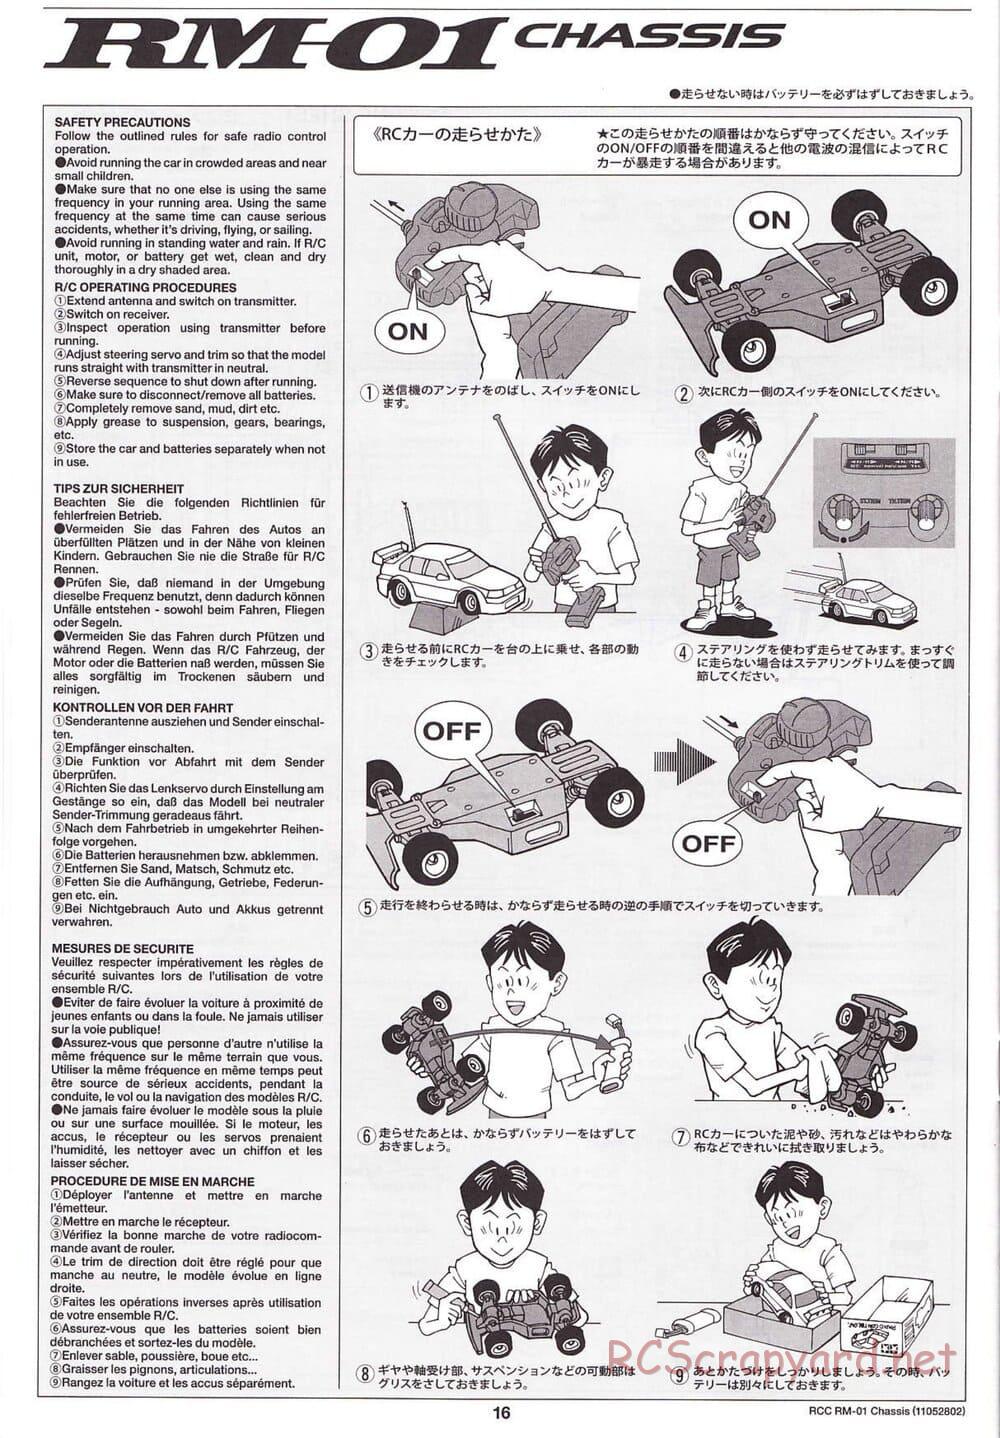 Tamiya - RM-01 Chassis - Manual - Page 16